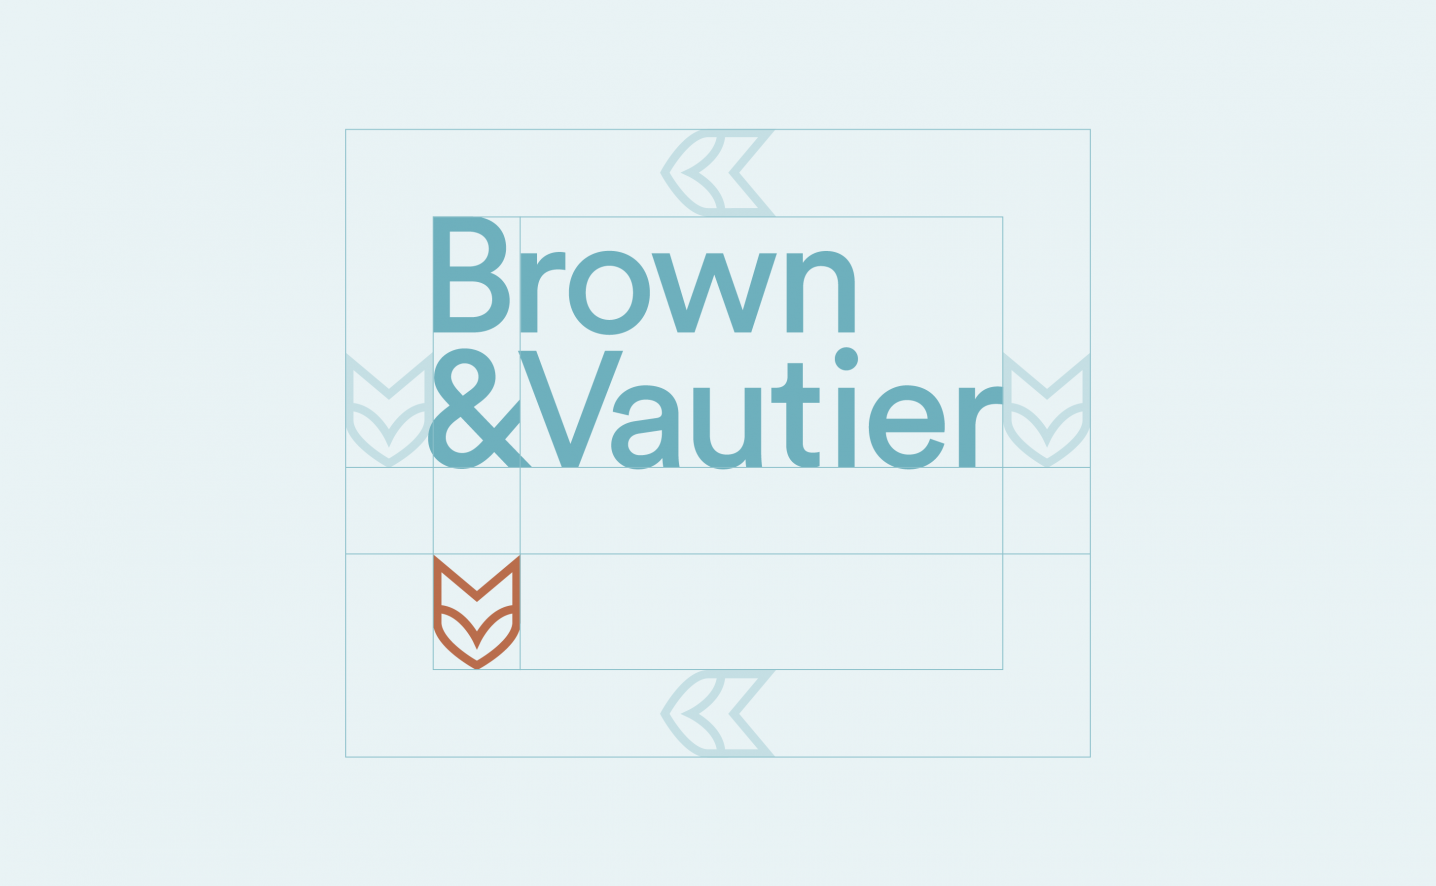 Brown-Vautier-logo-exclusion-zone